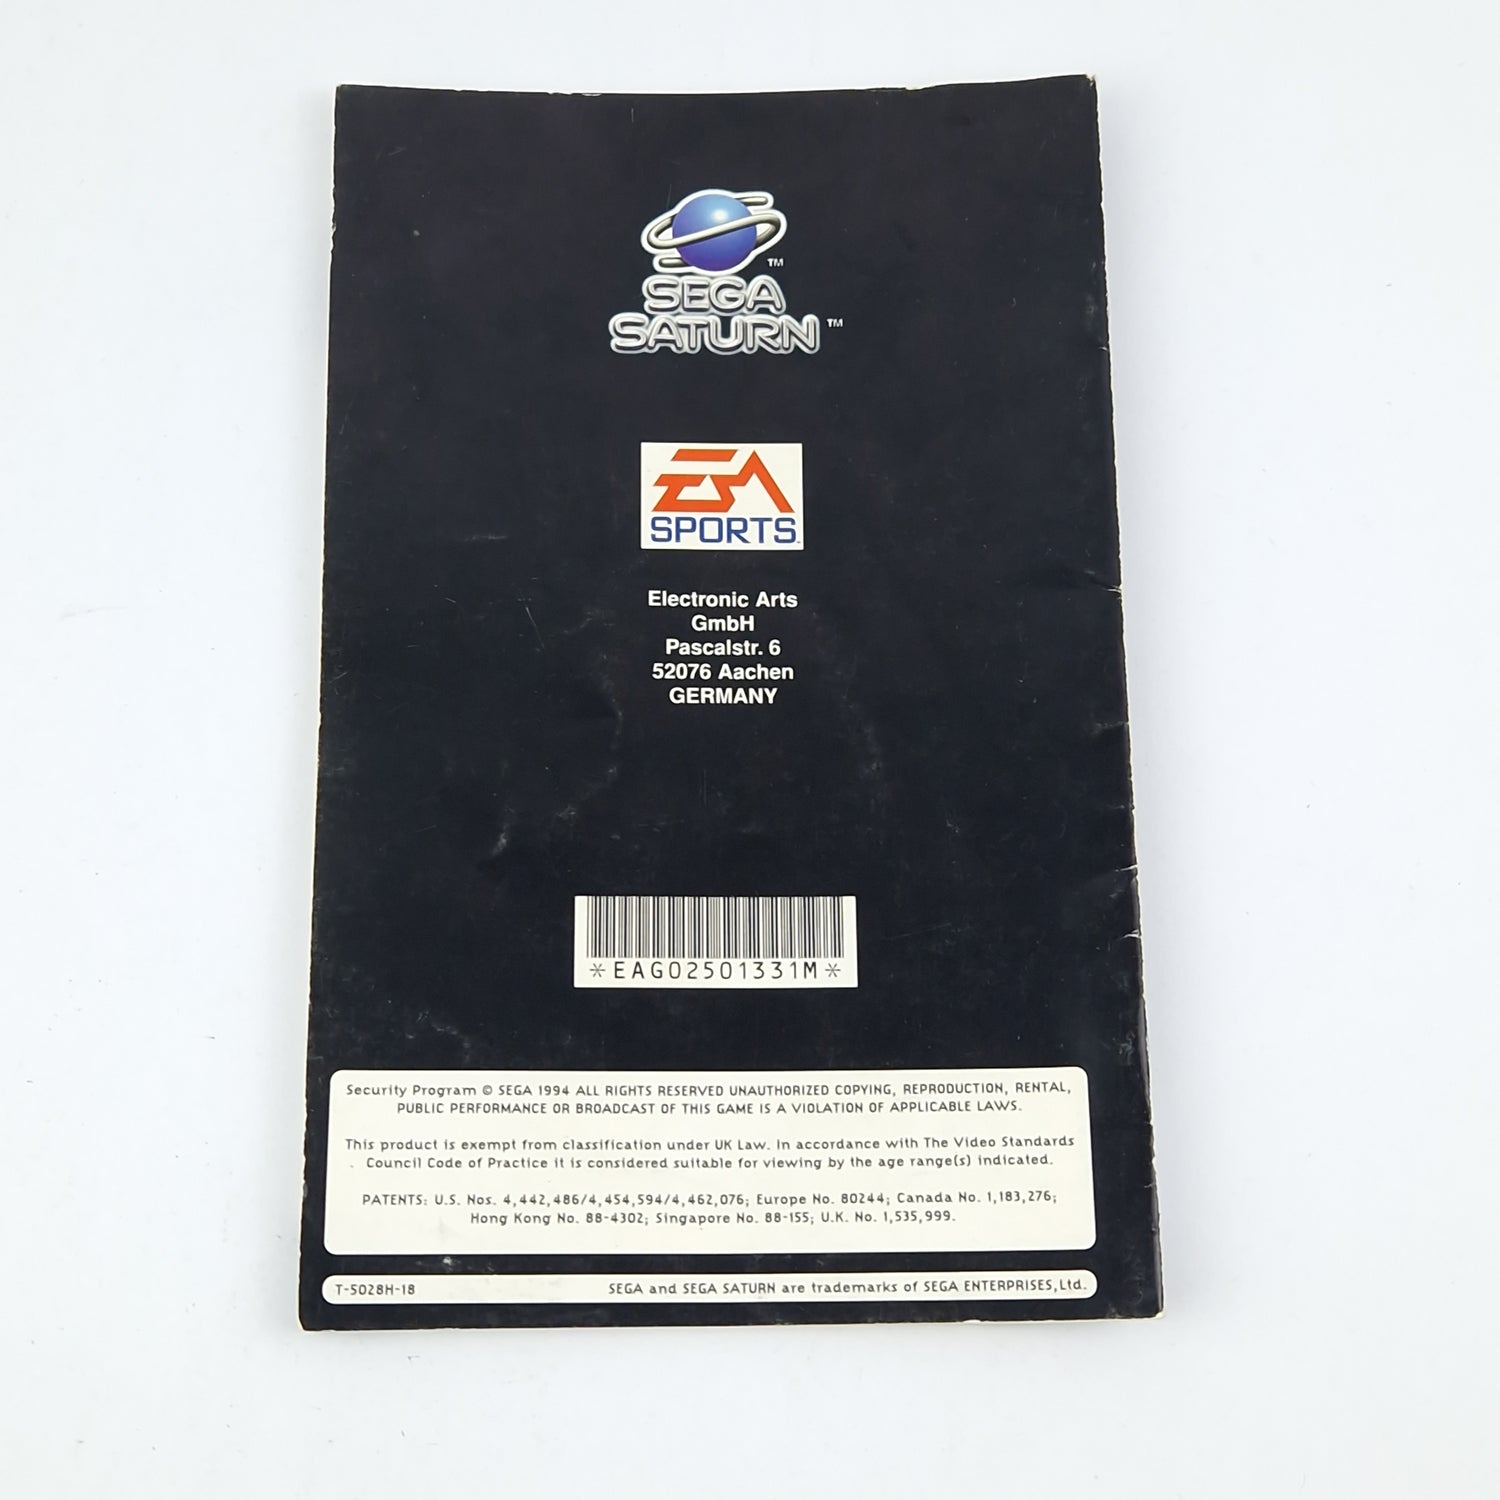 Sega Saturn Spiel : Nascar 98 - CD Anleitung OVP / PAL Disk Autorennen